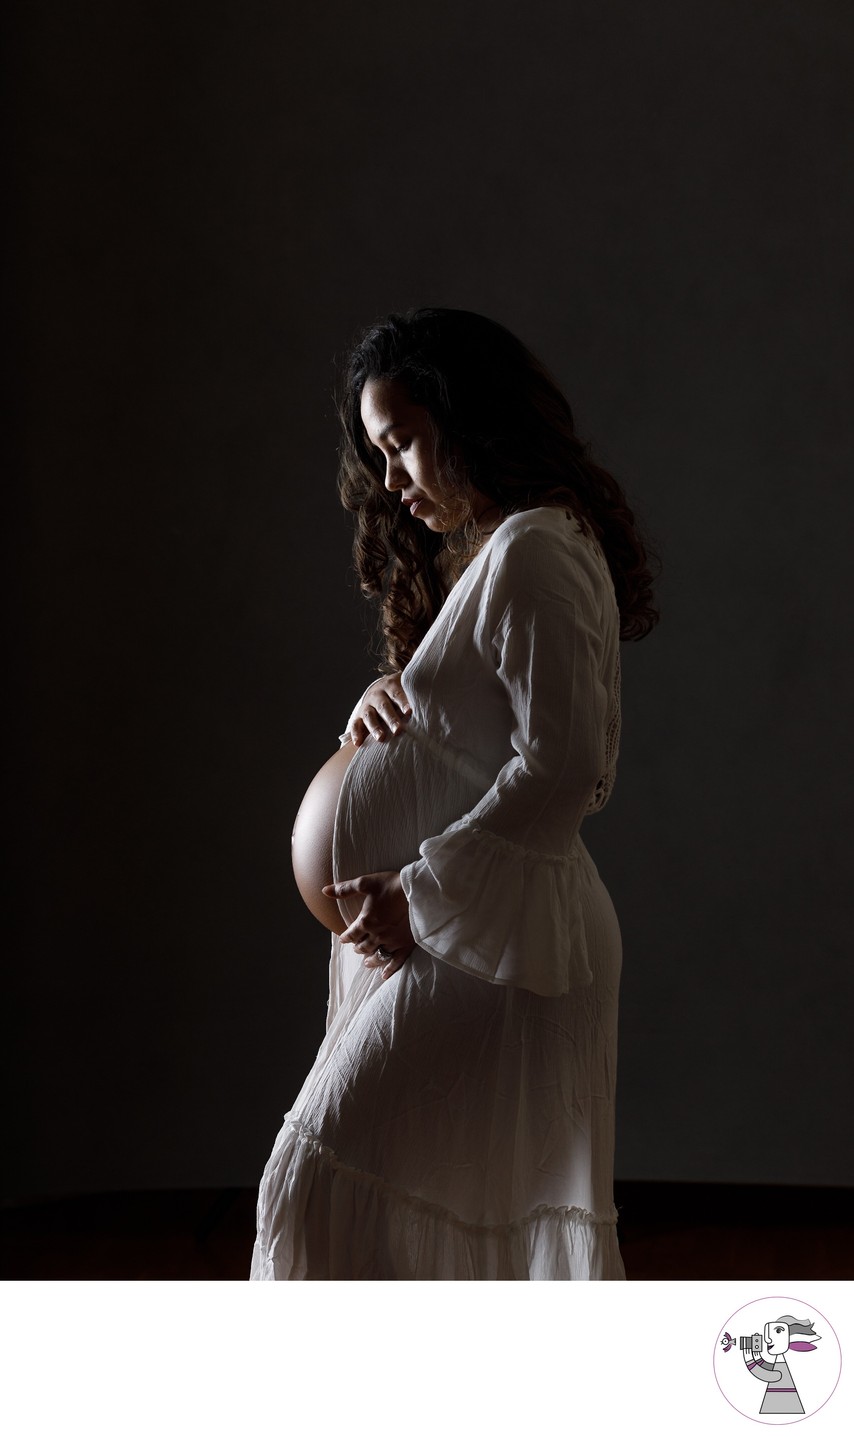 Stunning Maternity Silhouette Portrait for Expectant Moms